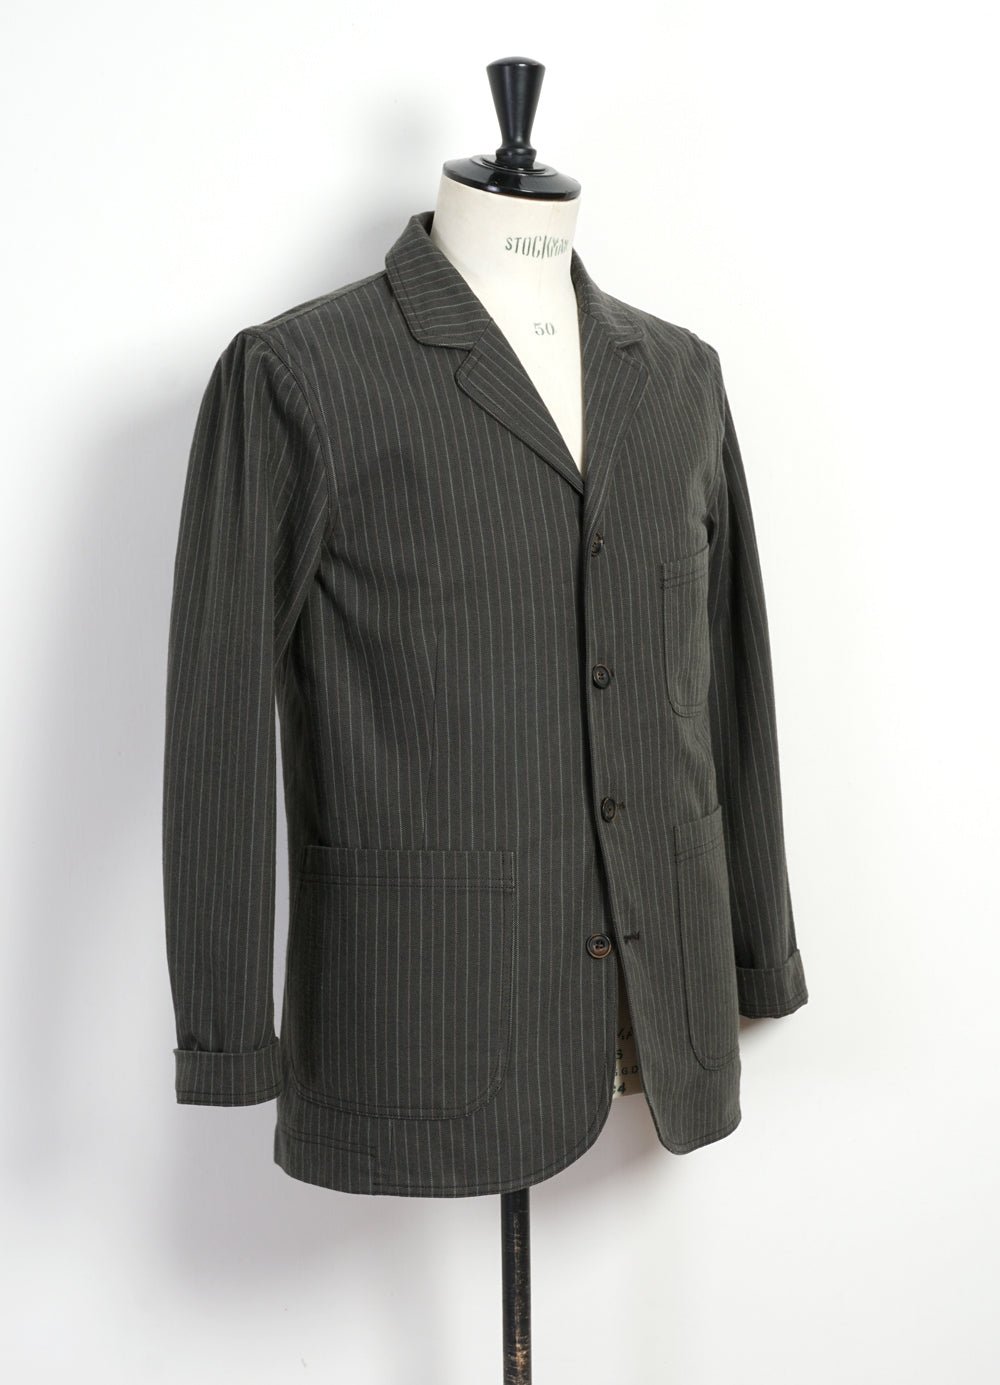 HANSEN GARMENTS - LUKAS | Blazer Jacket | Khaki Pin - HANSEN Garments